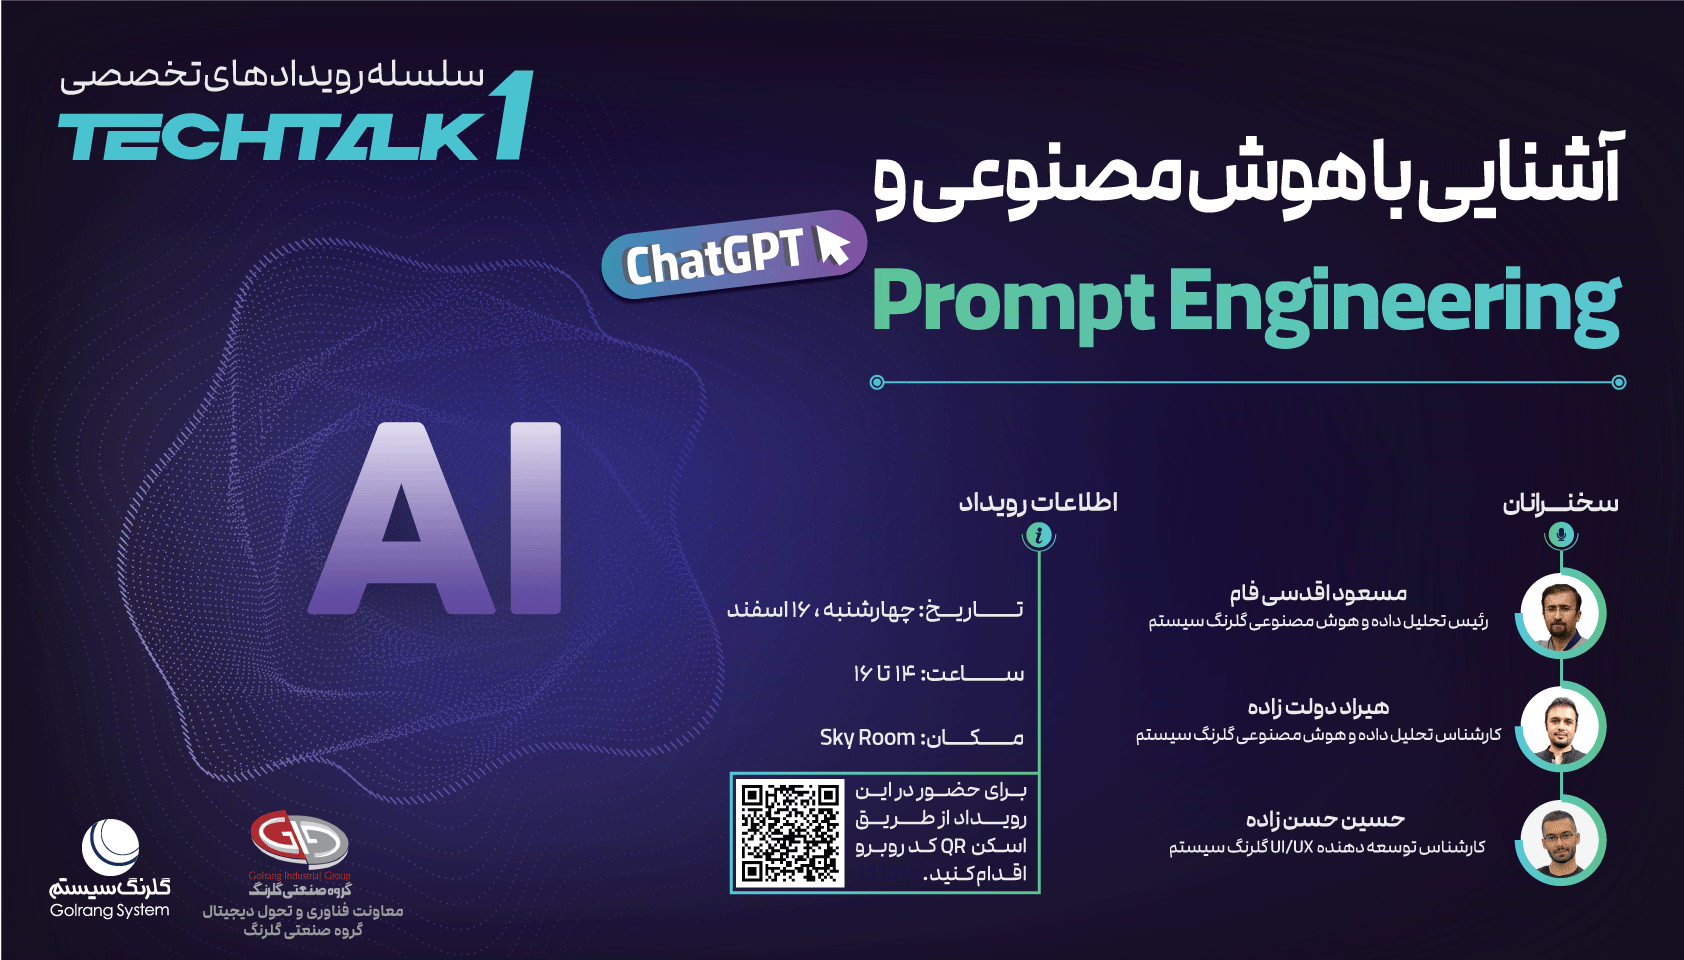 نخستين رويداد TechTalk با موضوع هوش مصنوعي و Prompt Engineering در ChatGPT 